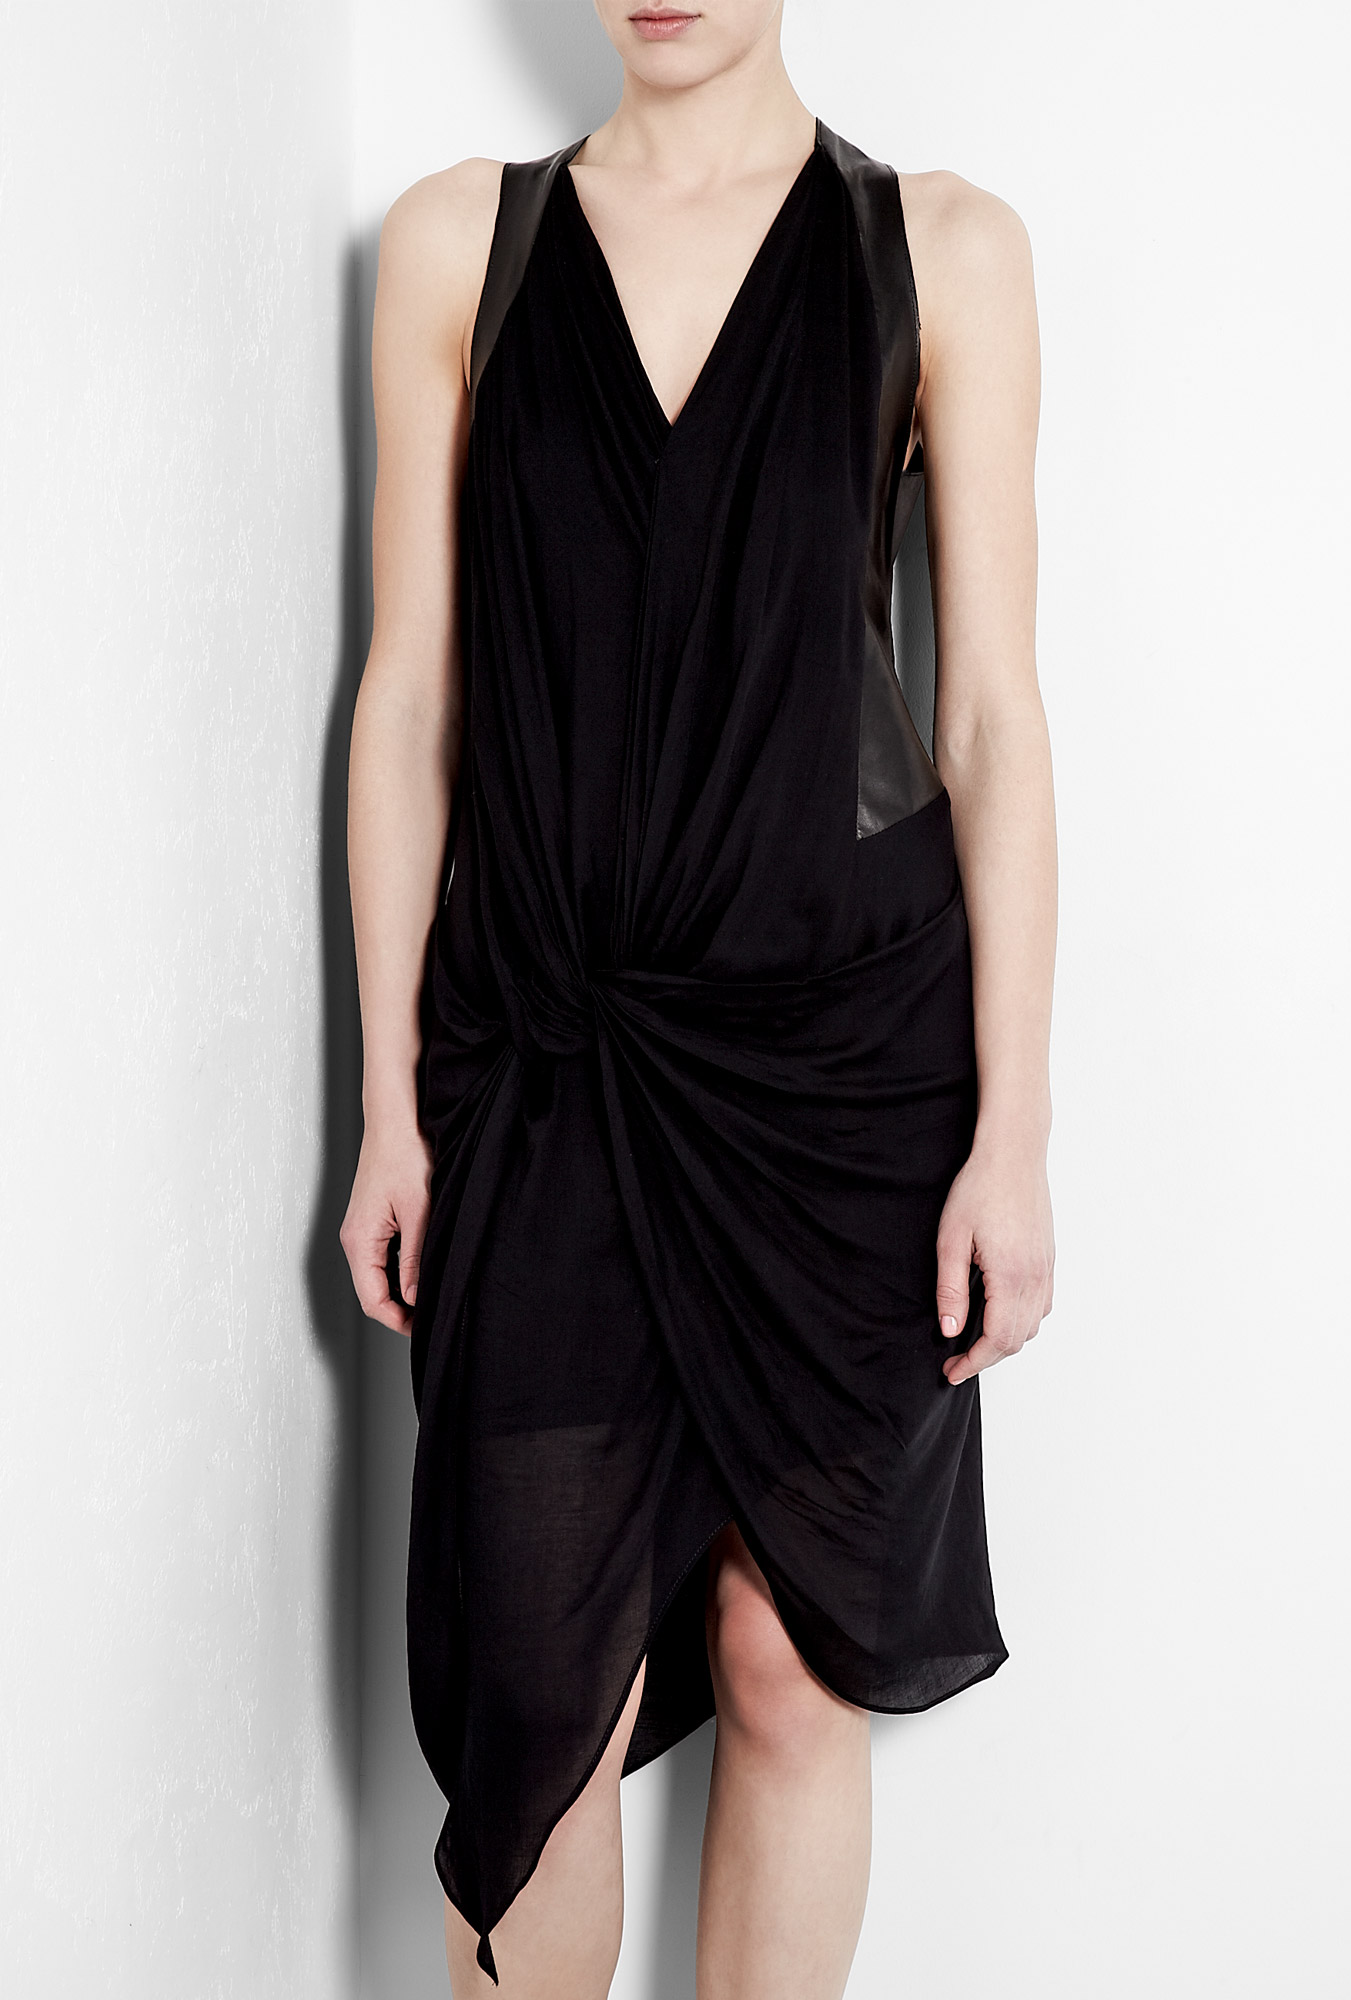 Helmut Lang Leather Panel Drape Jersey Dress in Black | Lyst